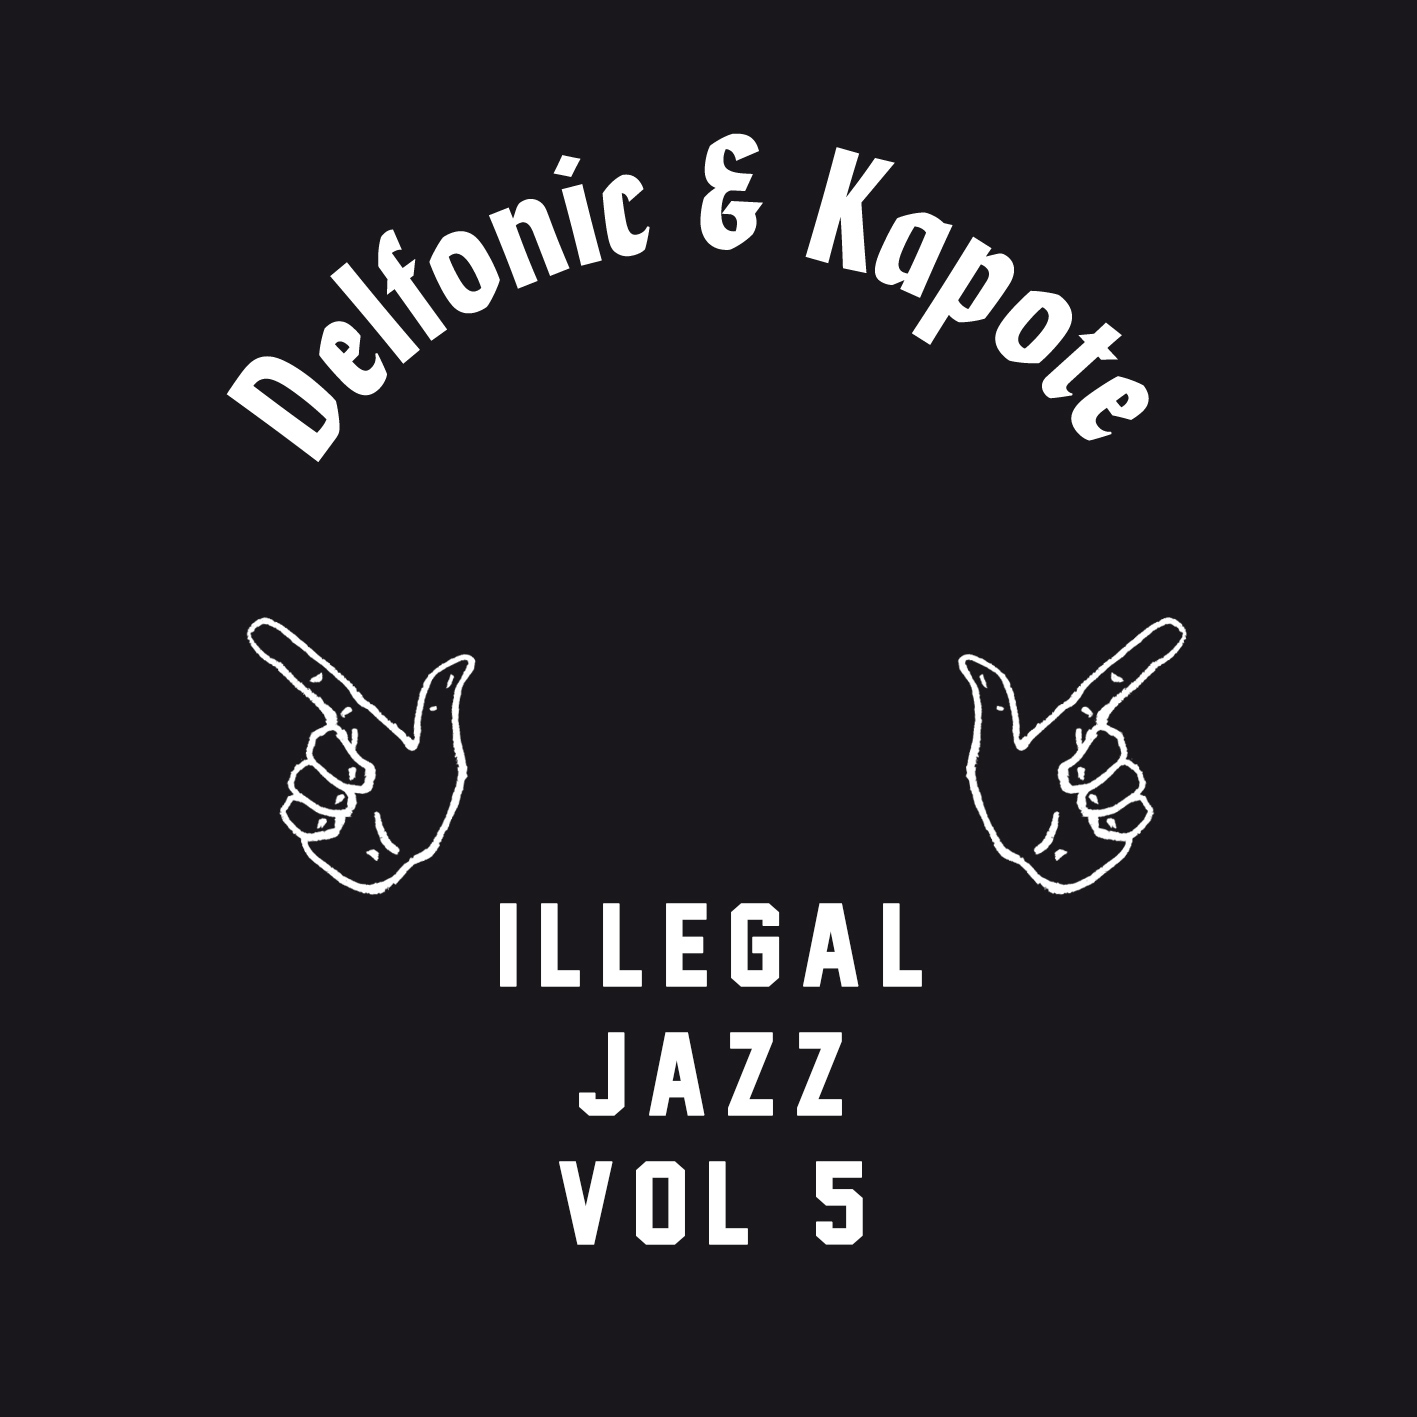 Delfonic & Kapote – Illegal Jazz Vol. 5  [IJR005]